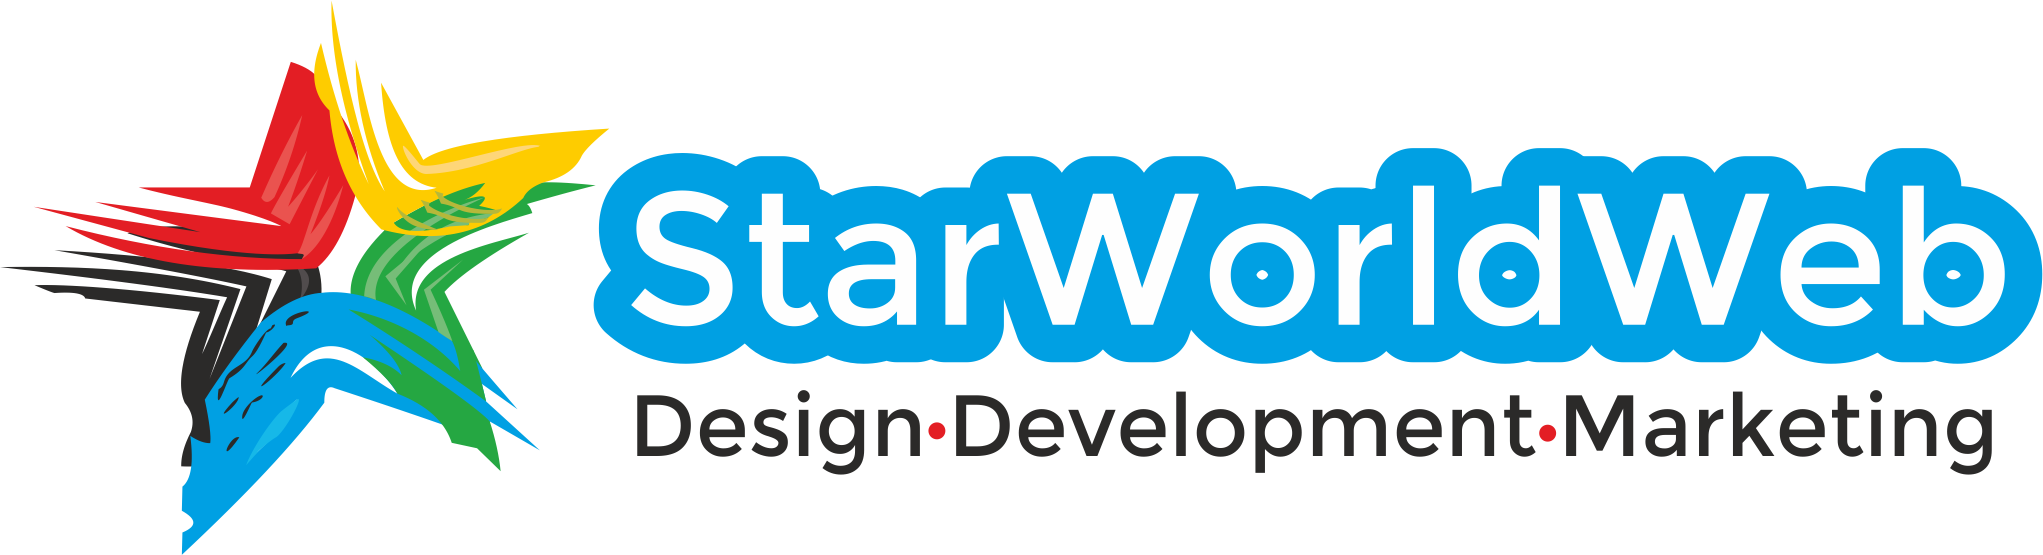 Star World Web - Professionals Real Estate (2043x555)